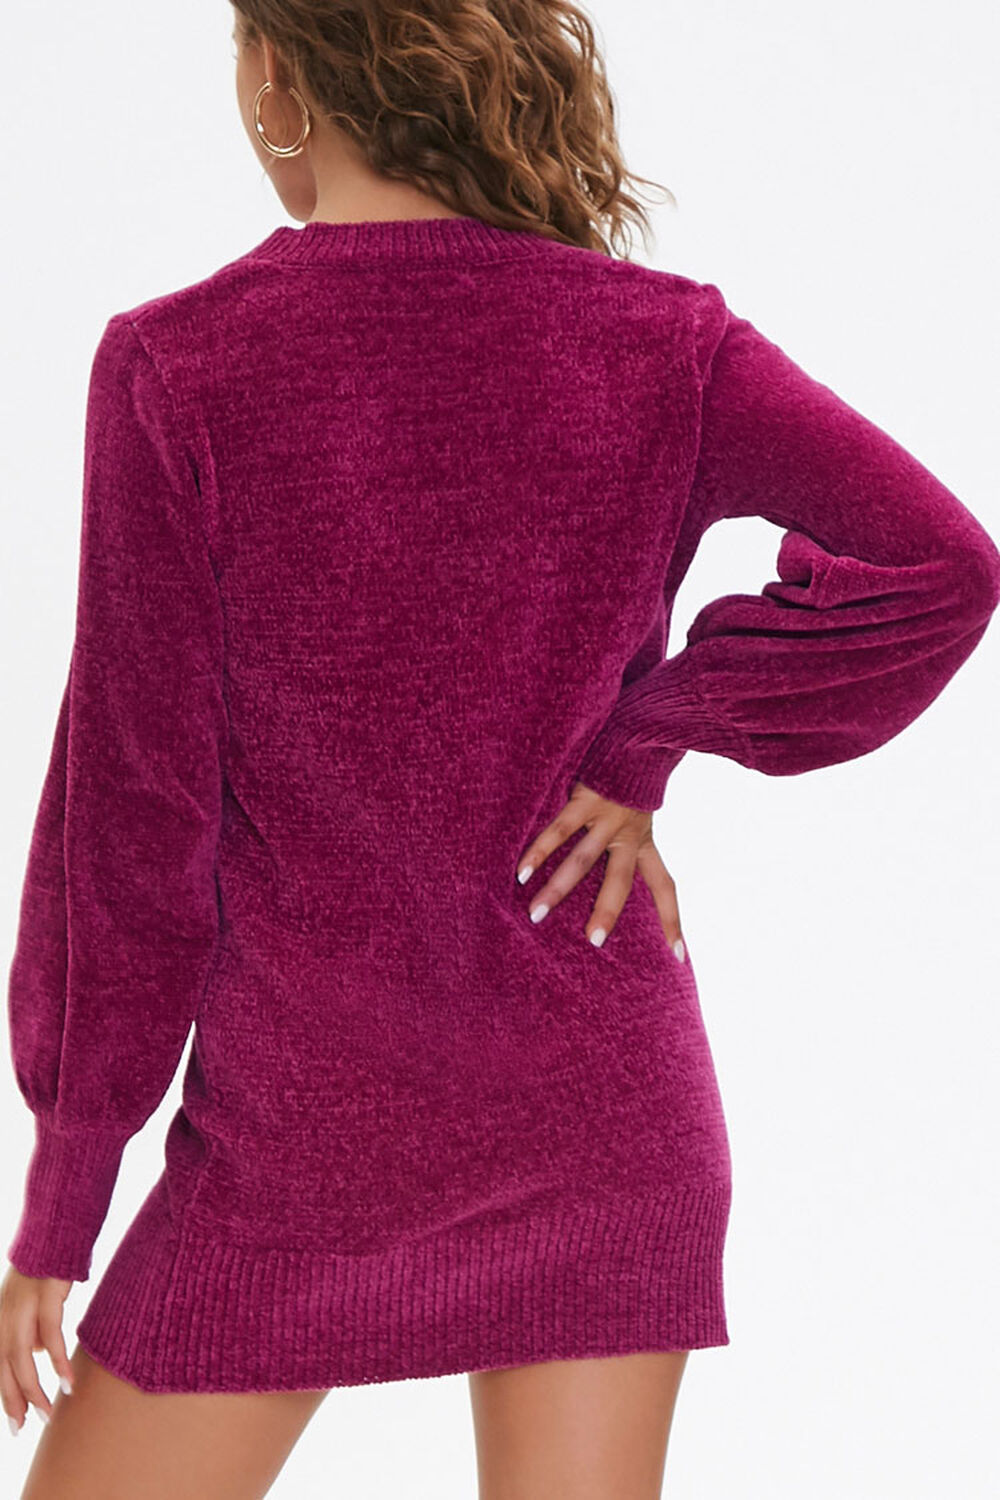 Chenille Sweater Dress, image 3